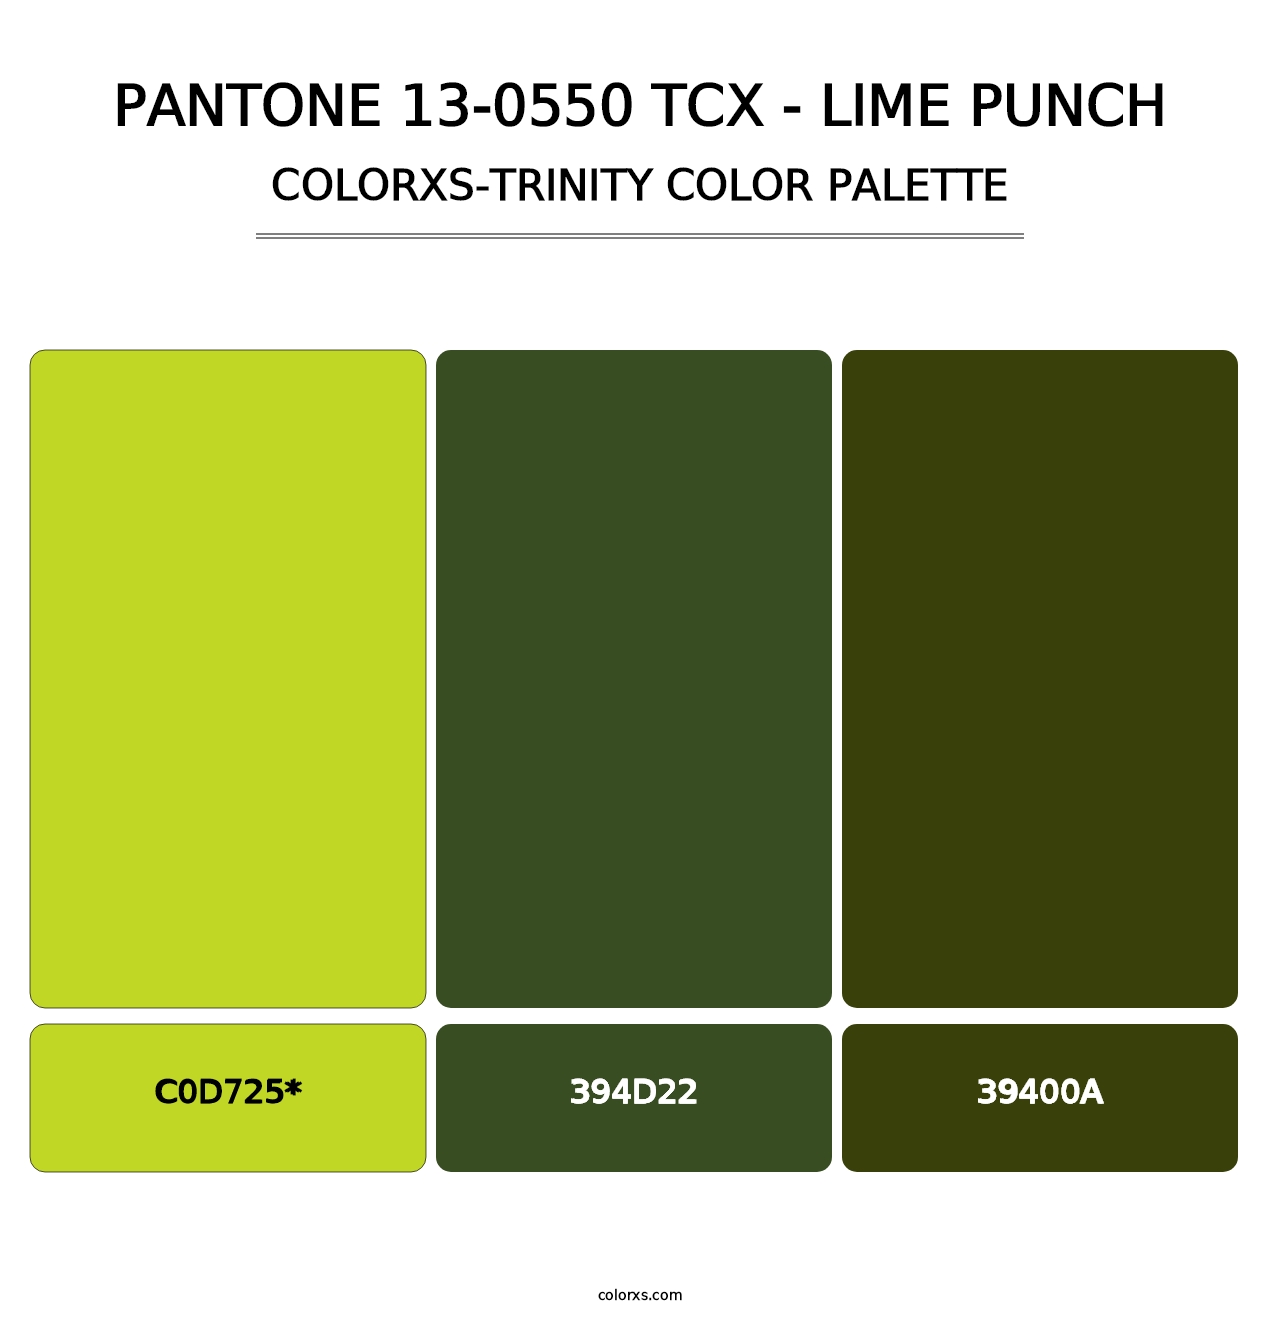 PANTONE 13-0550 TCX - Lime Punch - Colorxs Trinity Palette